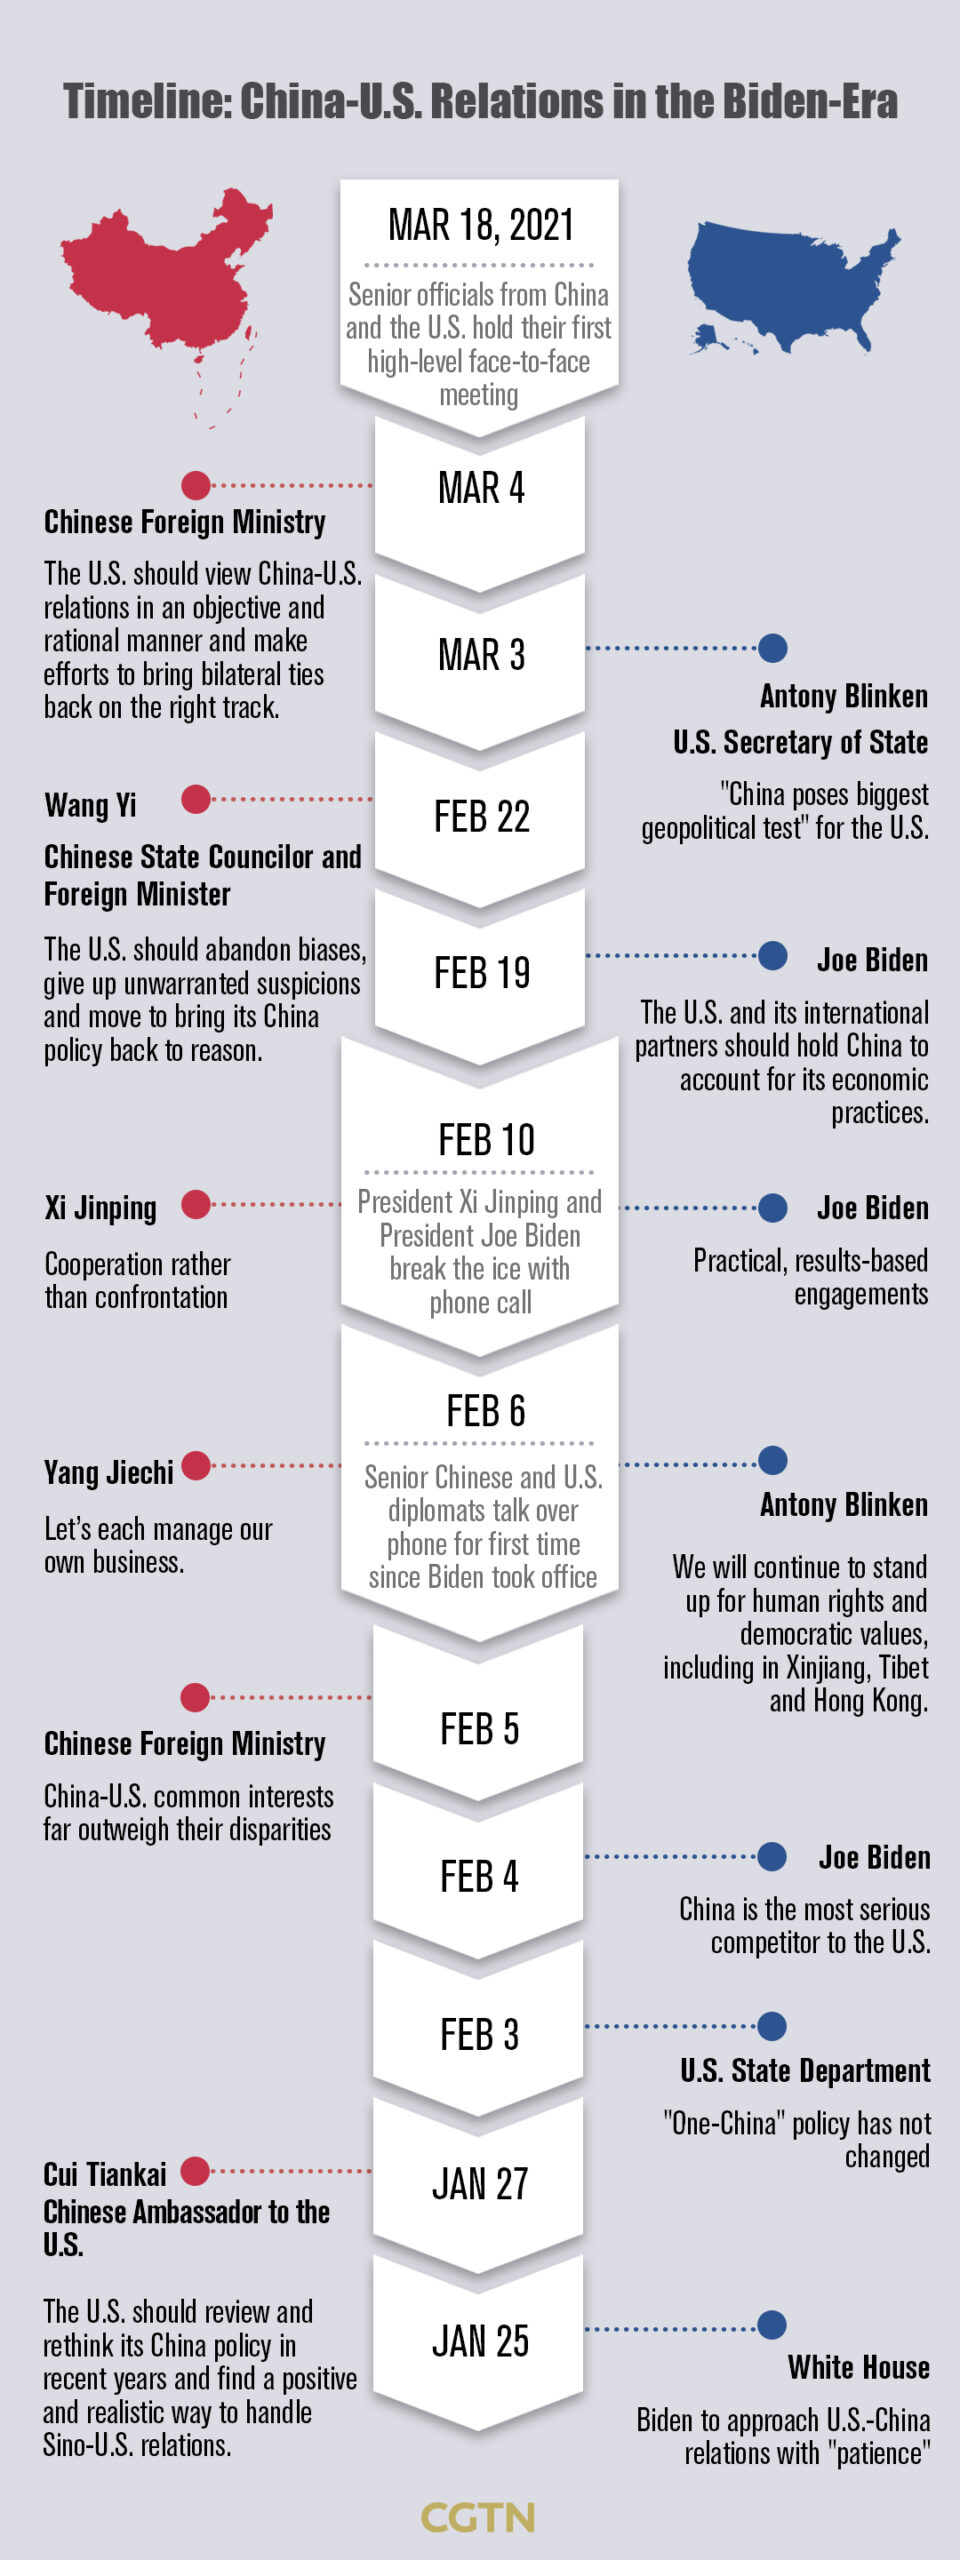 Timeline: U.S.-China Relations